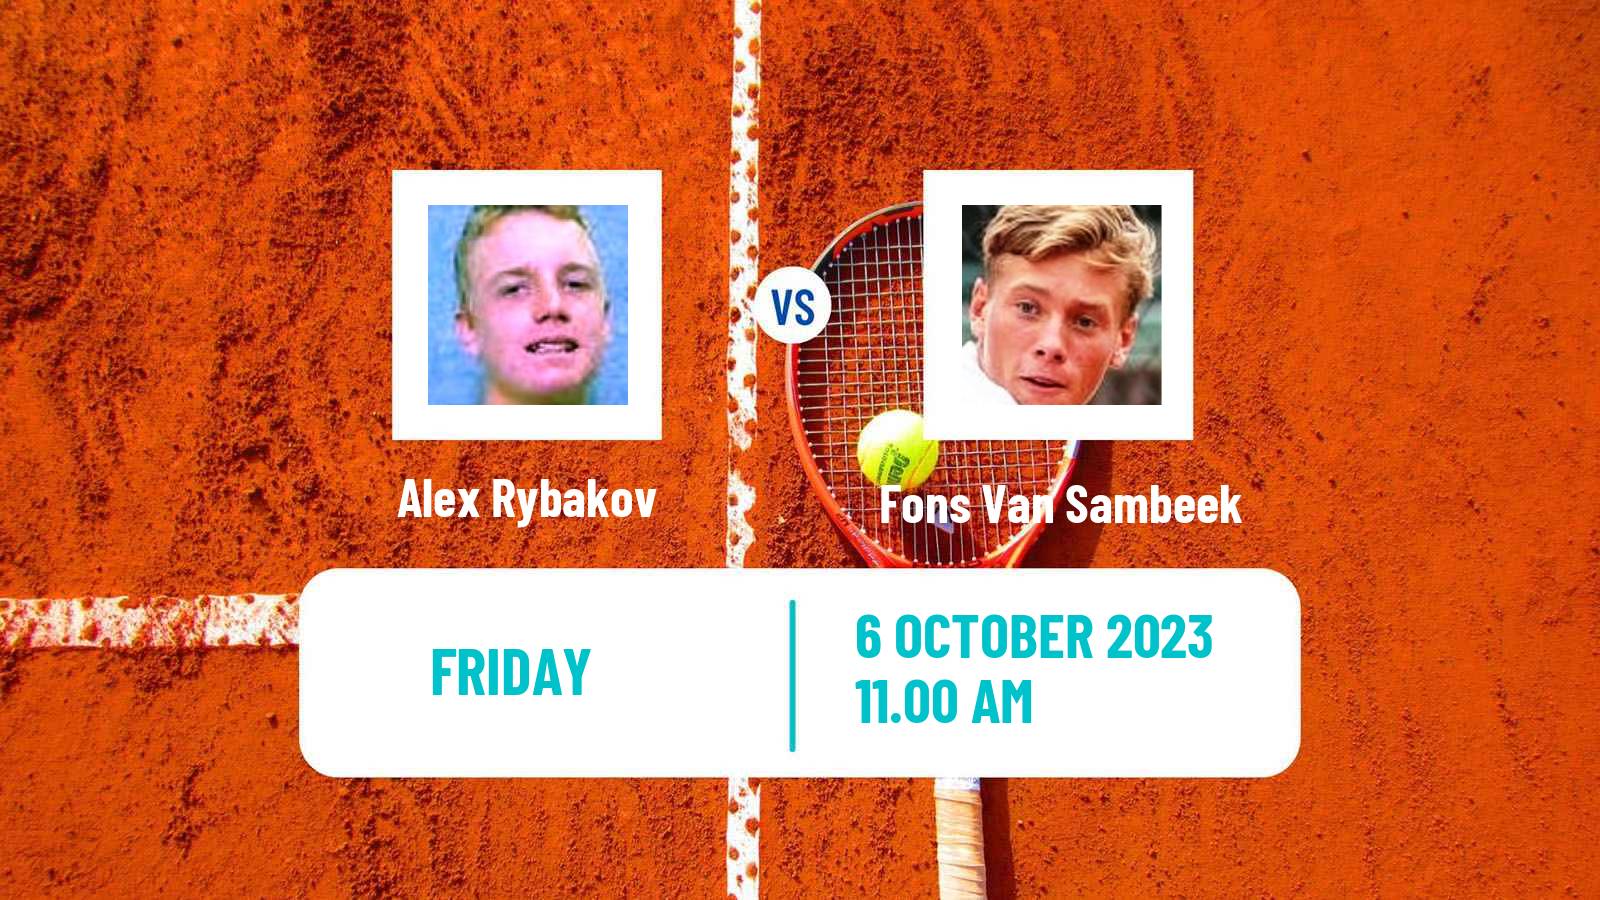 Tennis ITF M15 Ithaca Ny 2 Men Alex Rybakov - Fons Van Sambeek